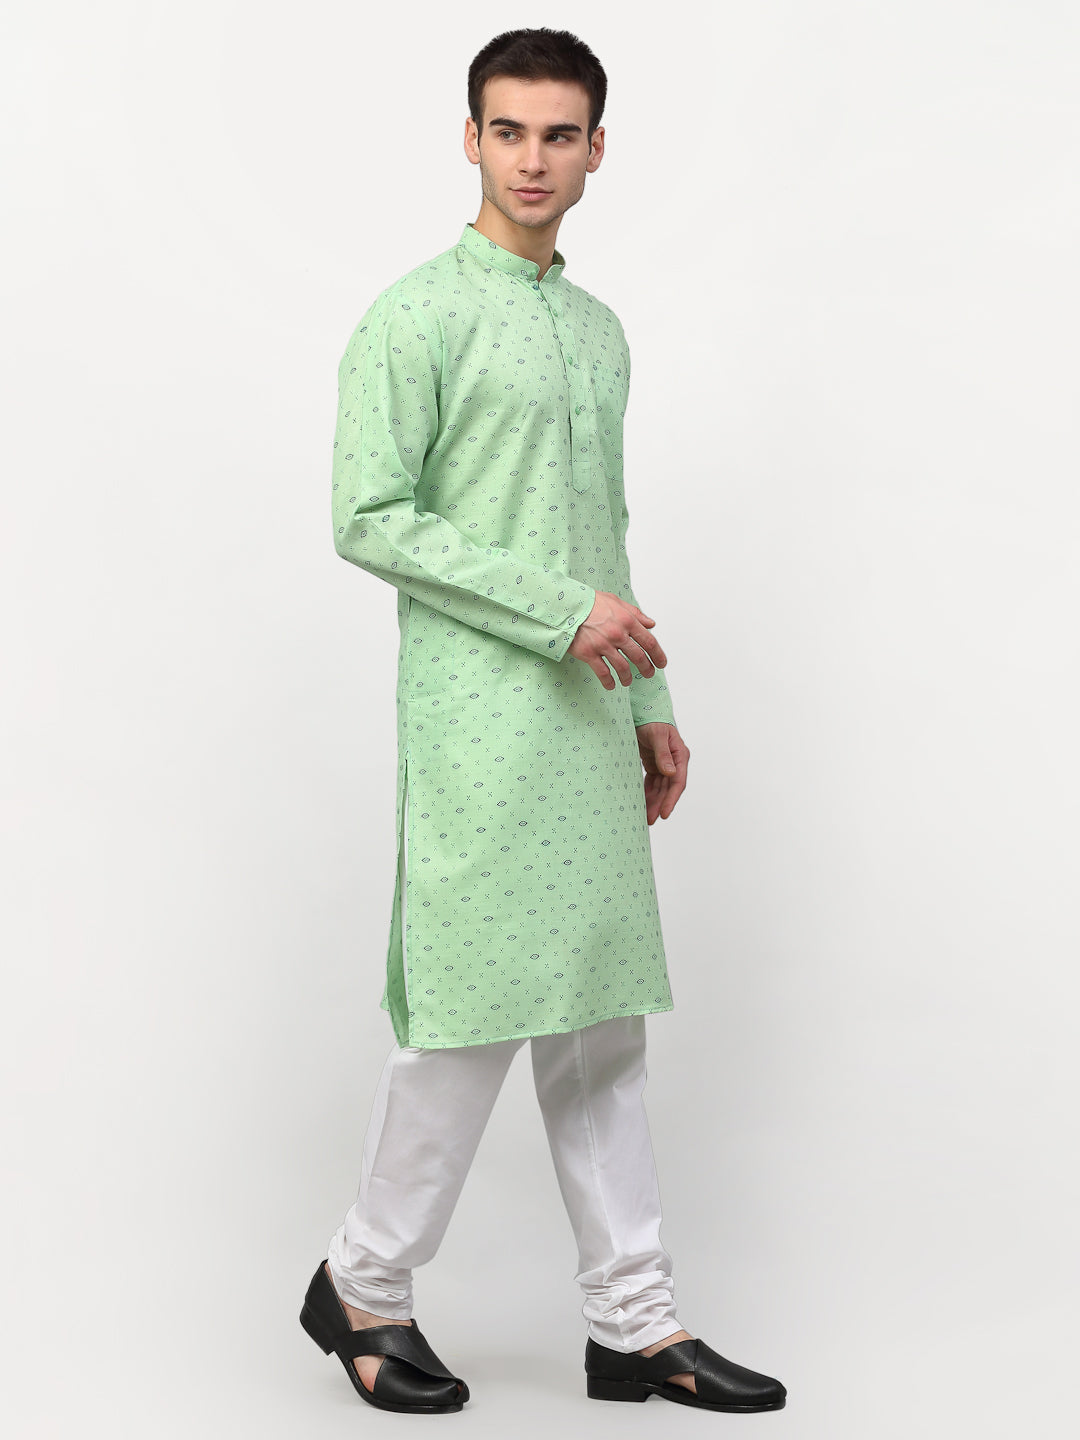 Jompers Men's Green Printed Cotton Kurta Payjama Sets